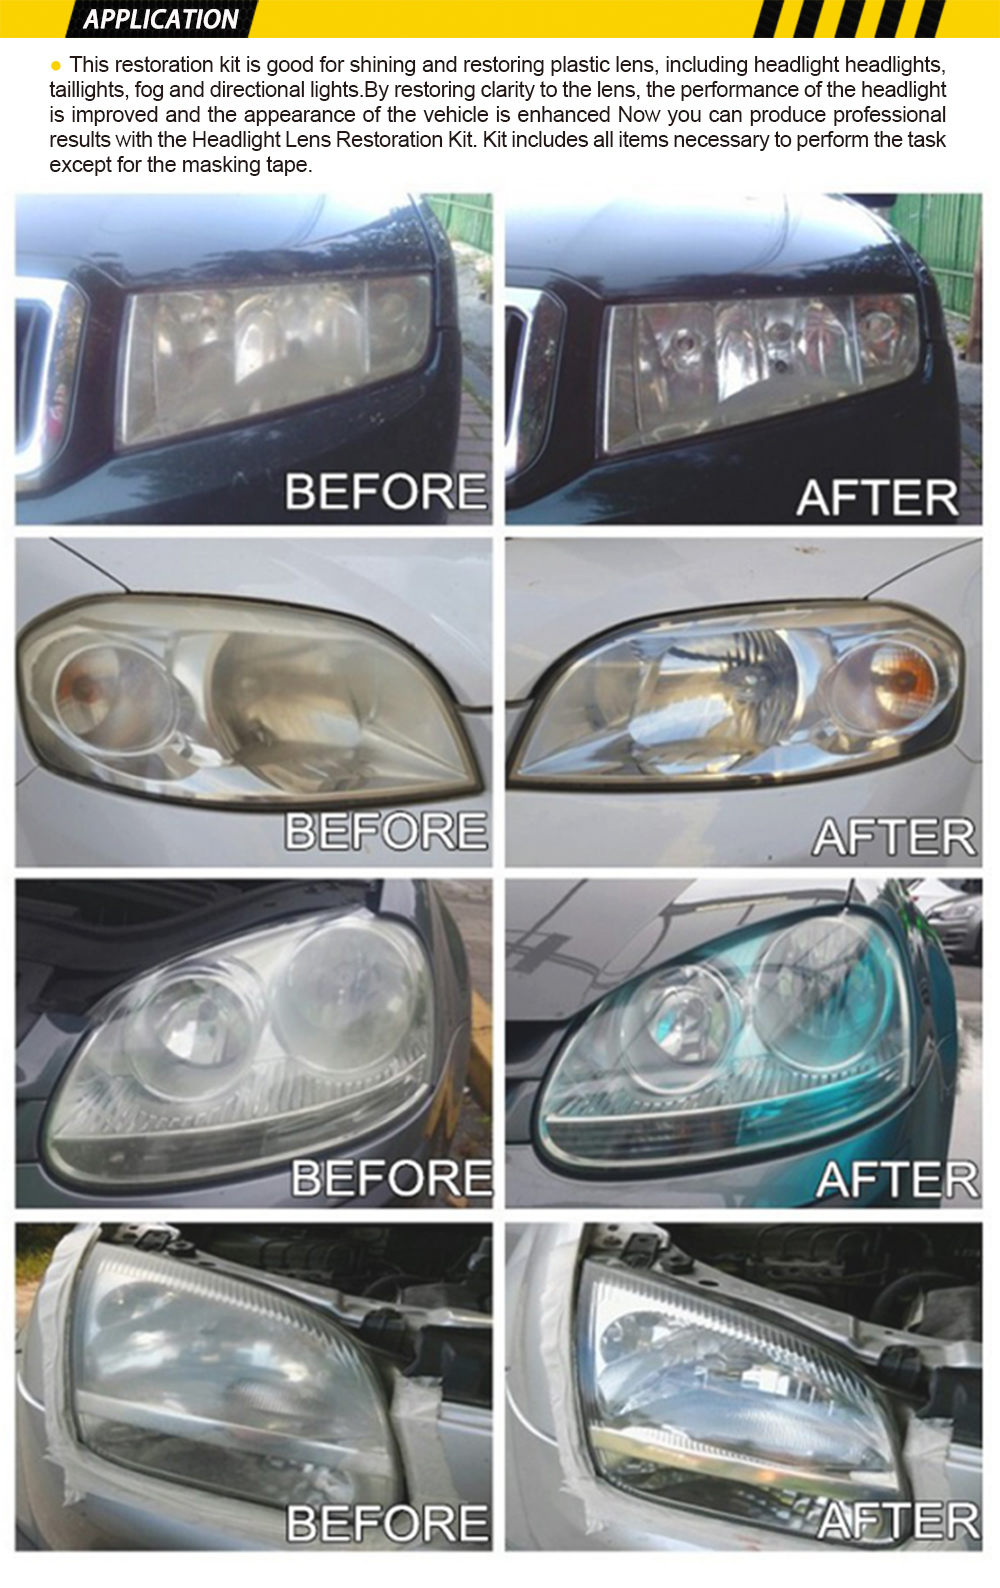 LOCBONDSO Car DIY Headlight Scratch Manumotive Restoration Kit Repair Tool